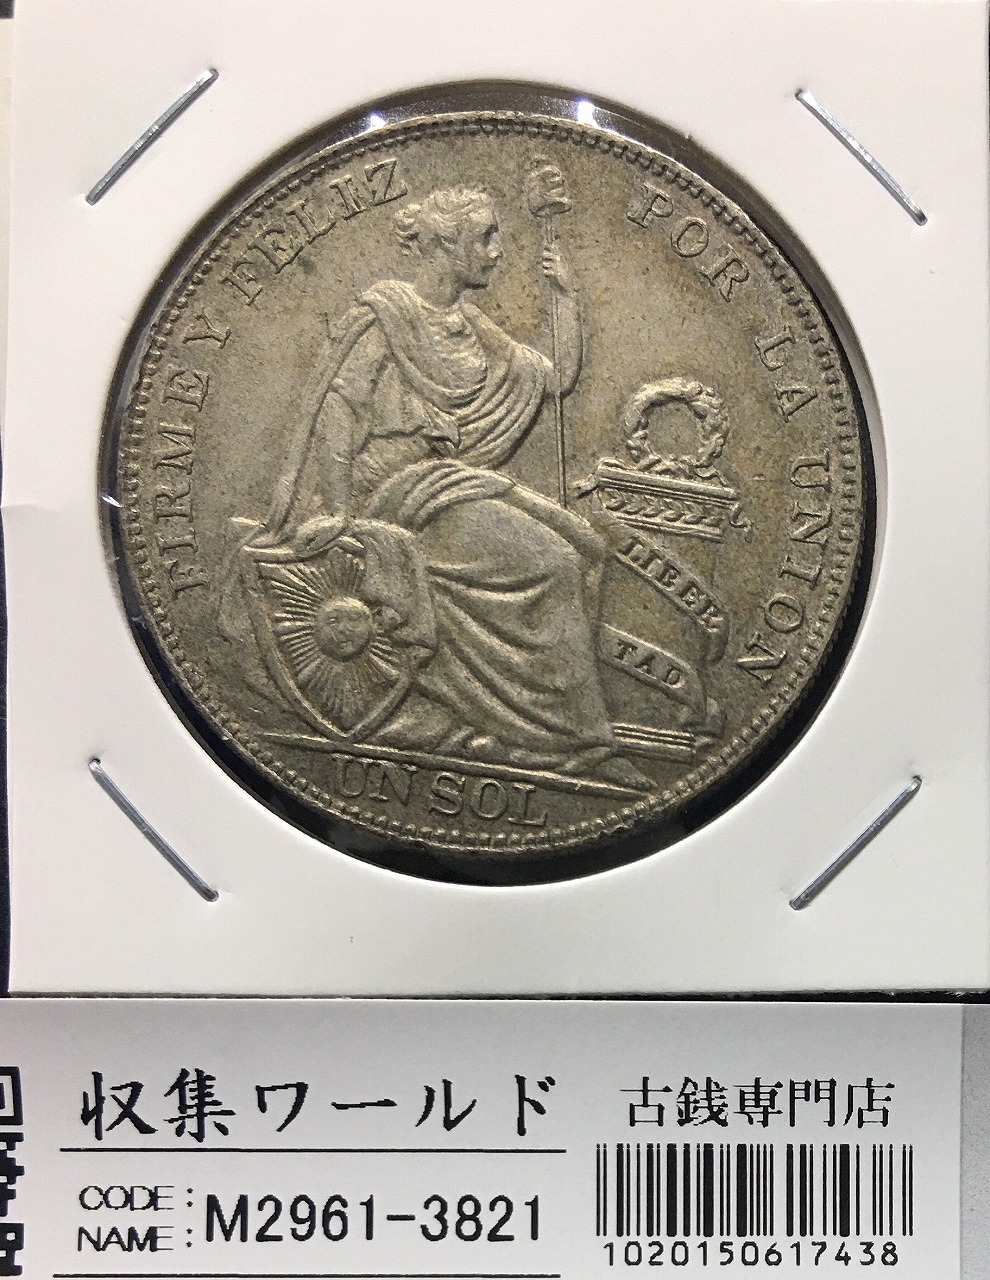 ペルー共和国 1ソル銀貨/女神座像 1930年銘 大型近代銀貨 極美品